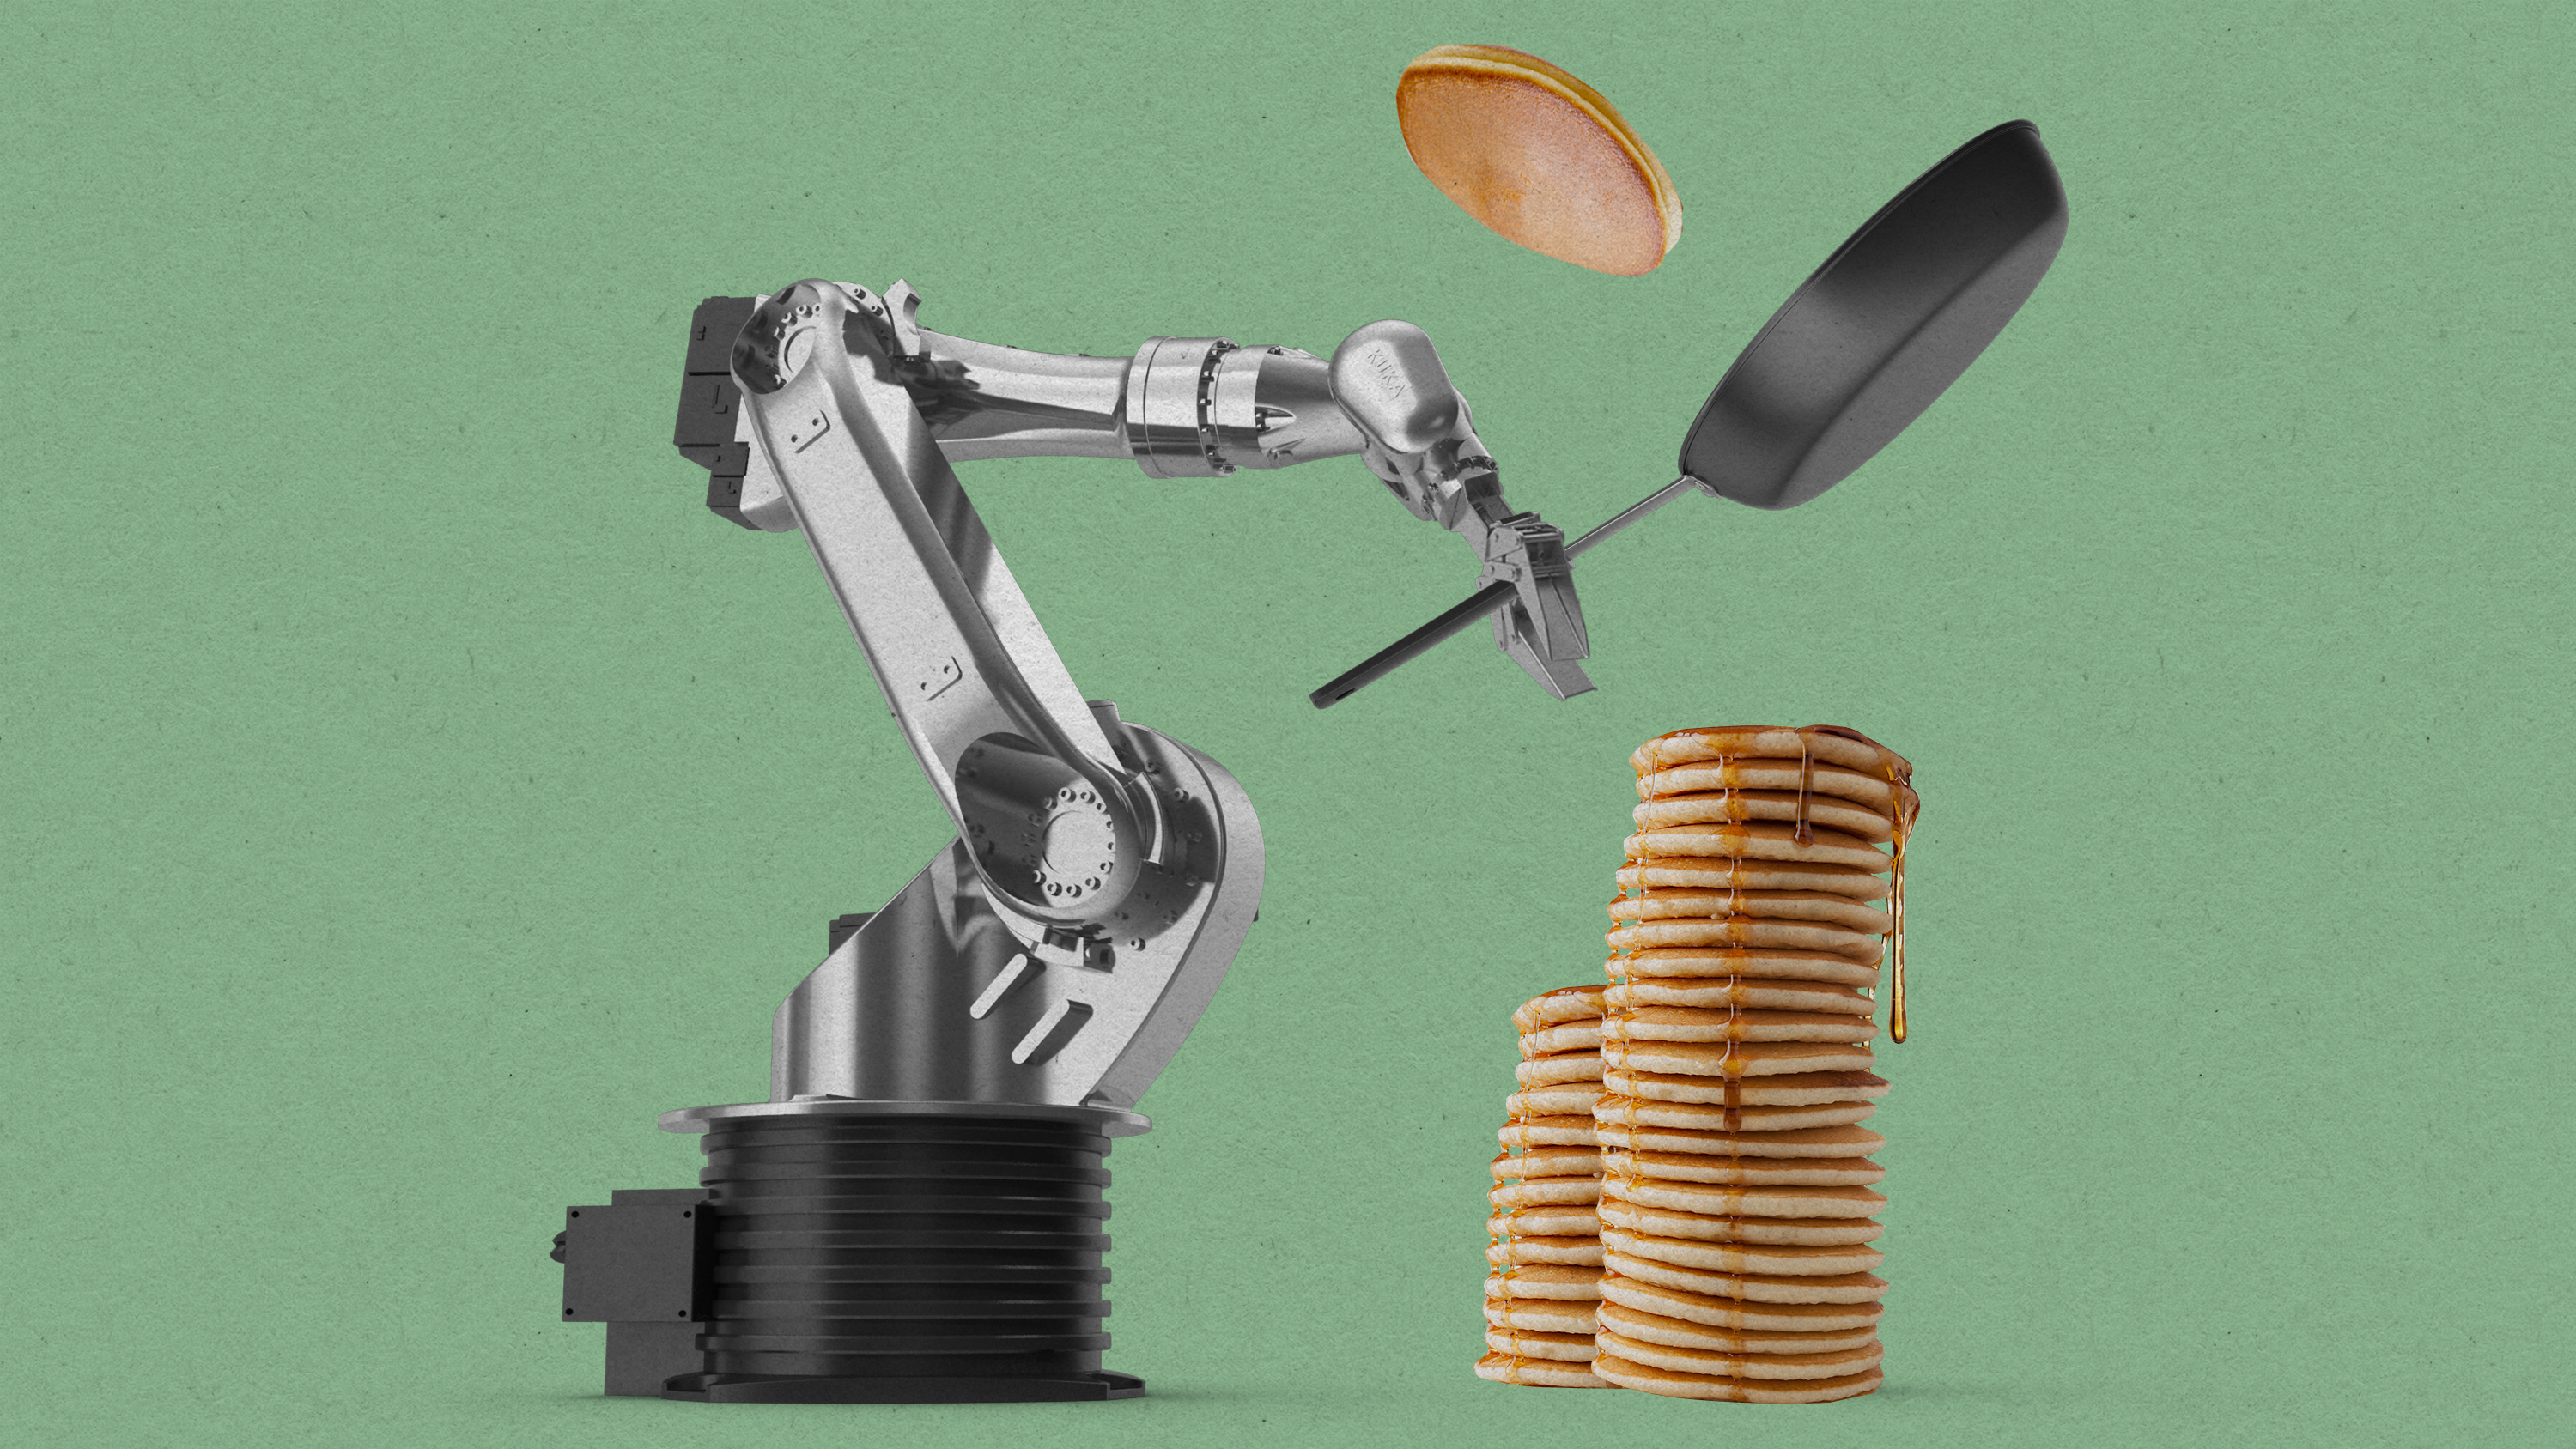 Photo illustration showing a robotic arm flipping pancakes